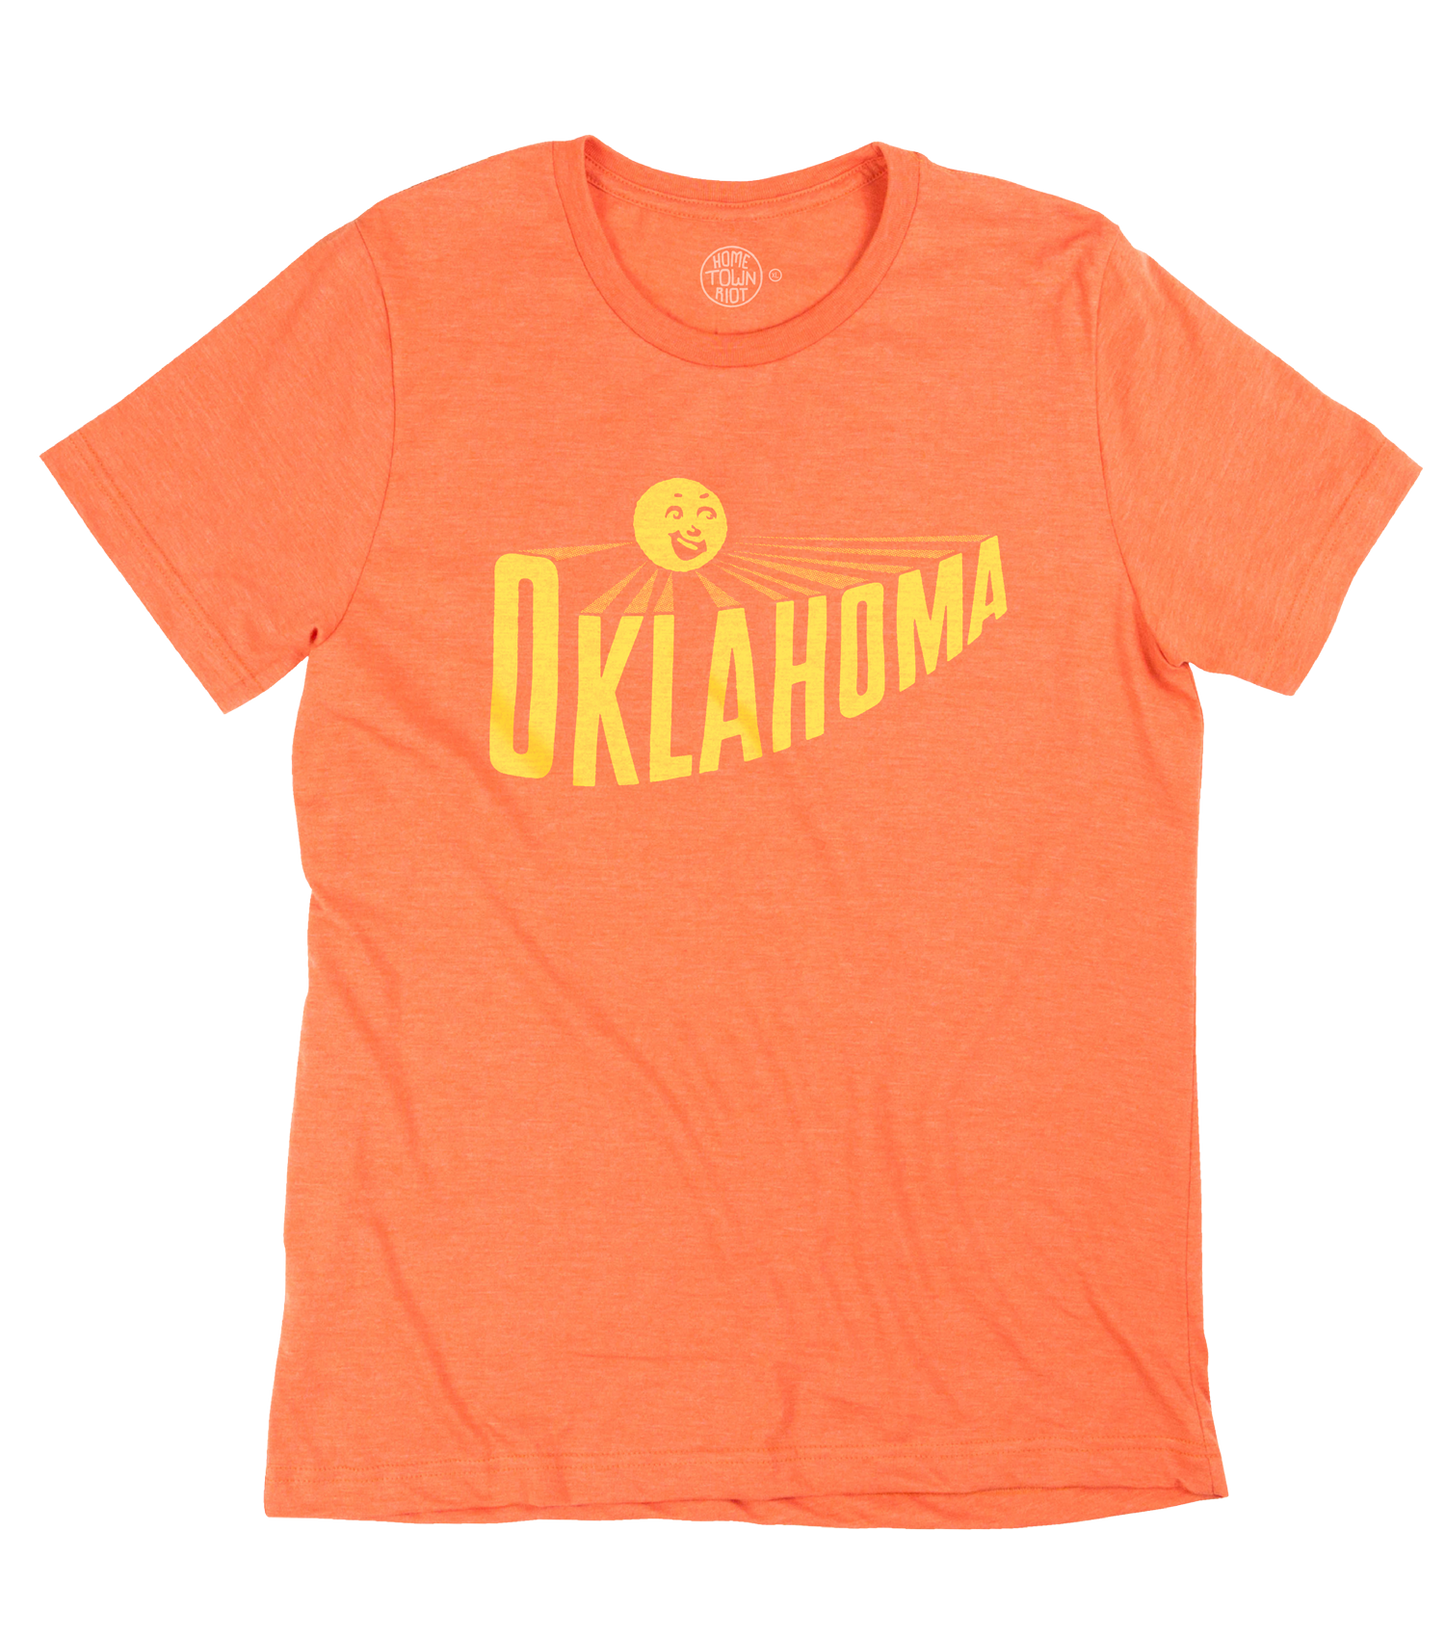 Sunny Oklahoma Shirt - HomeTownRiot